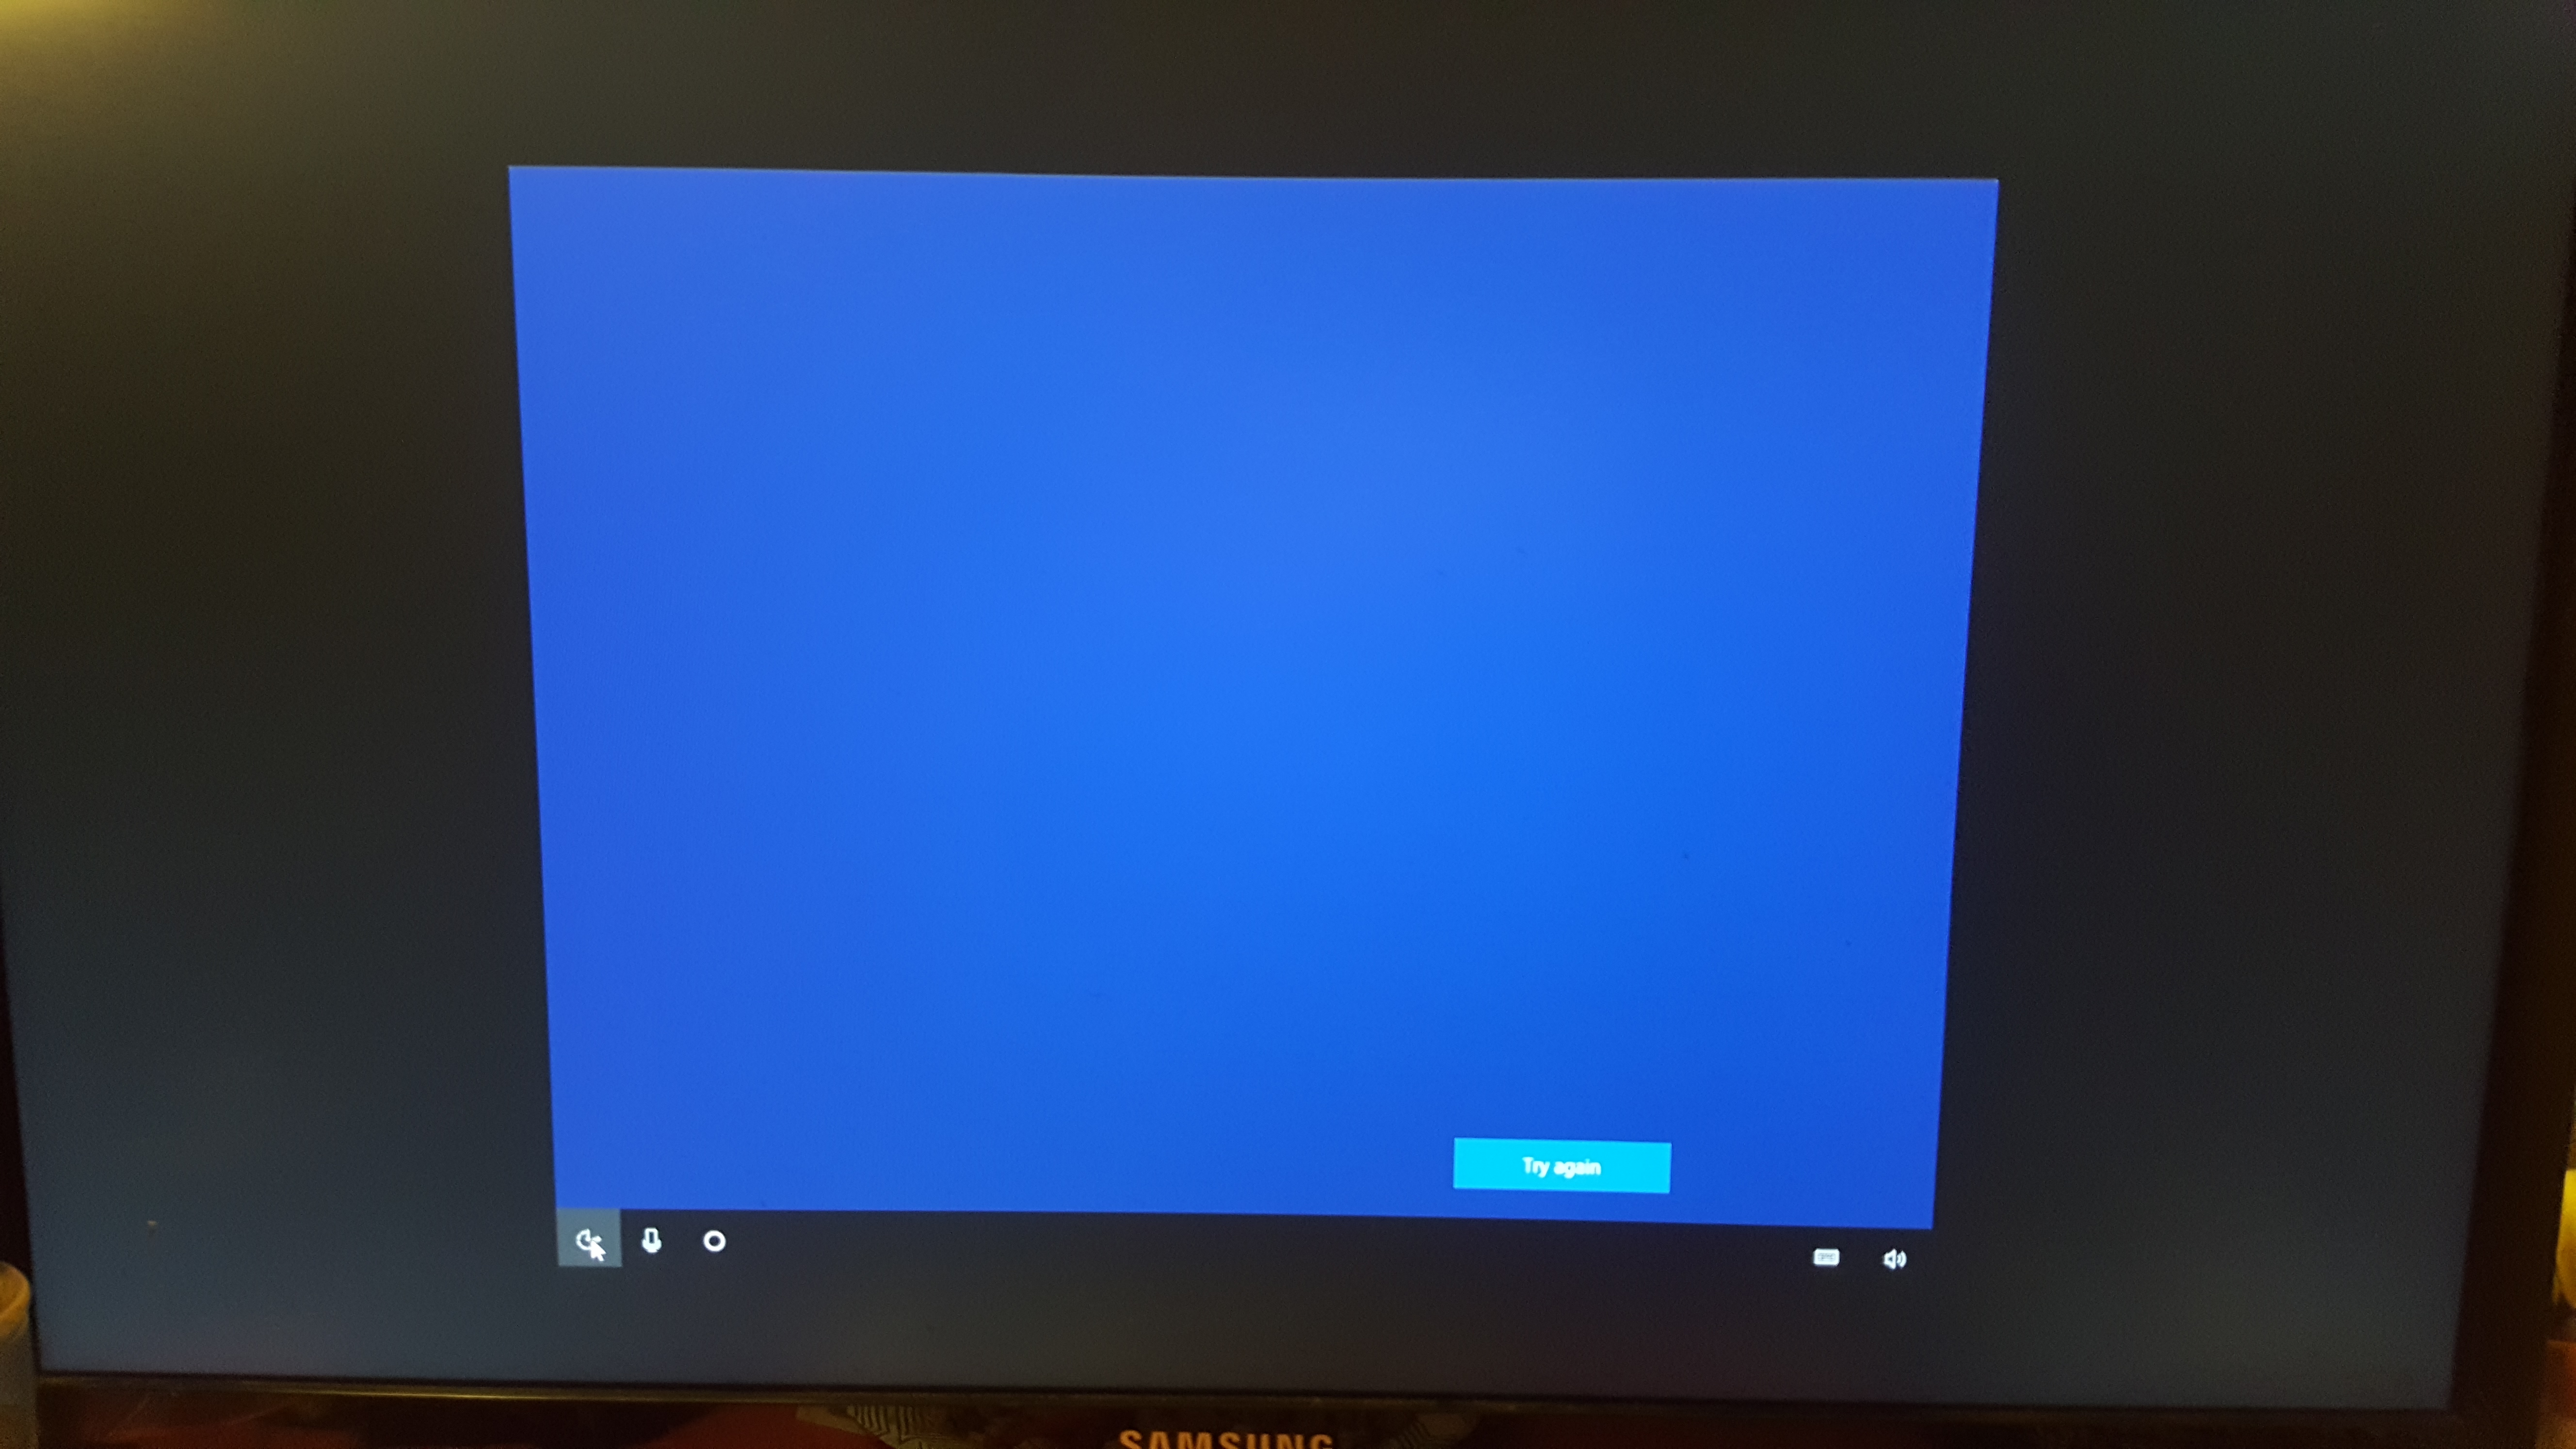 værdig Intensiv Luksus Desktop stuck on blue box - Microsoft Community